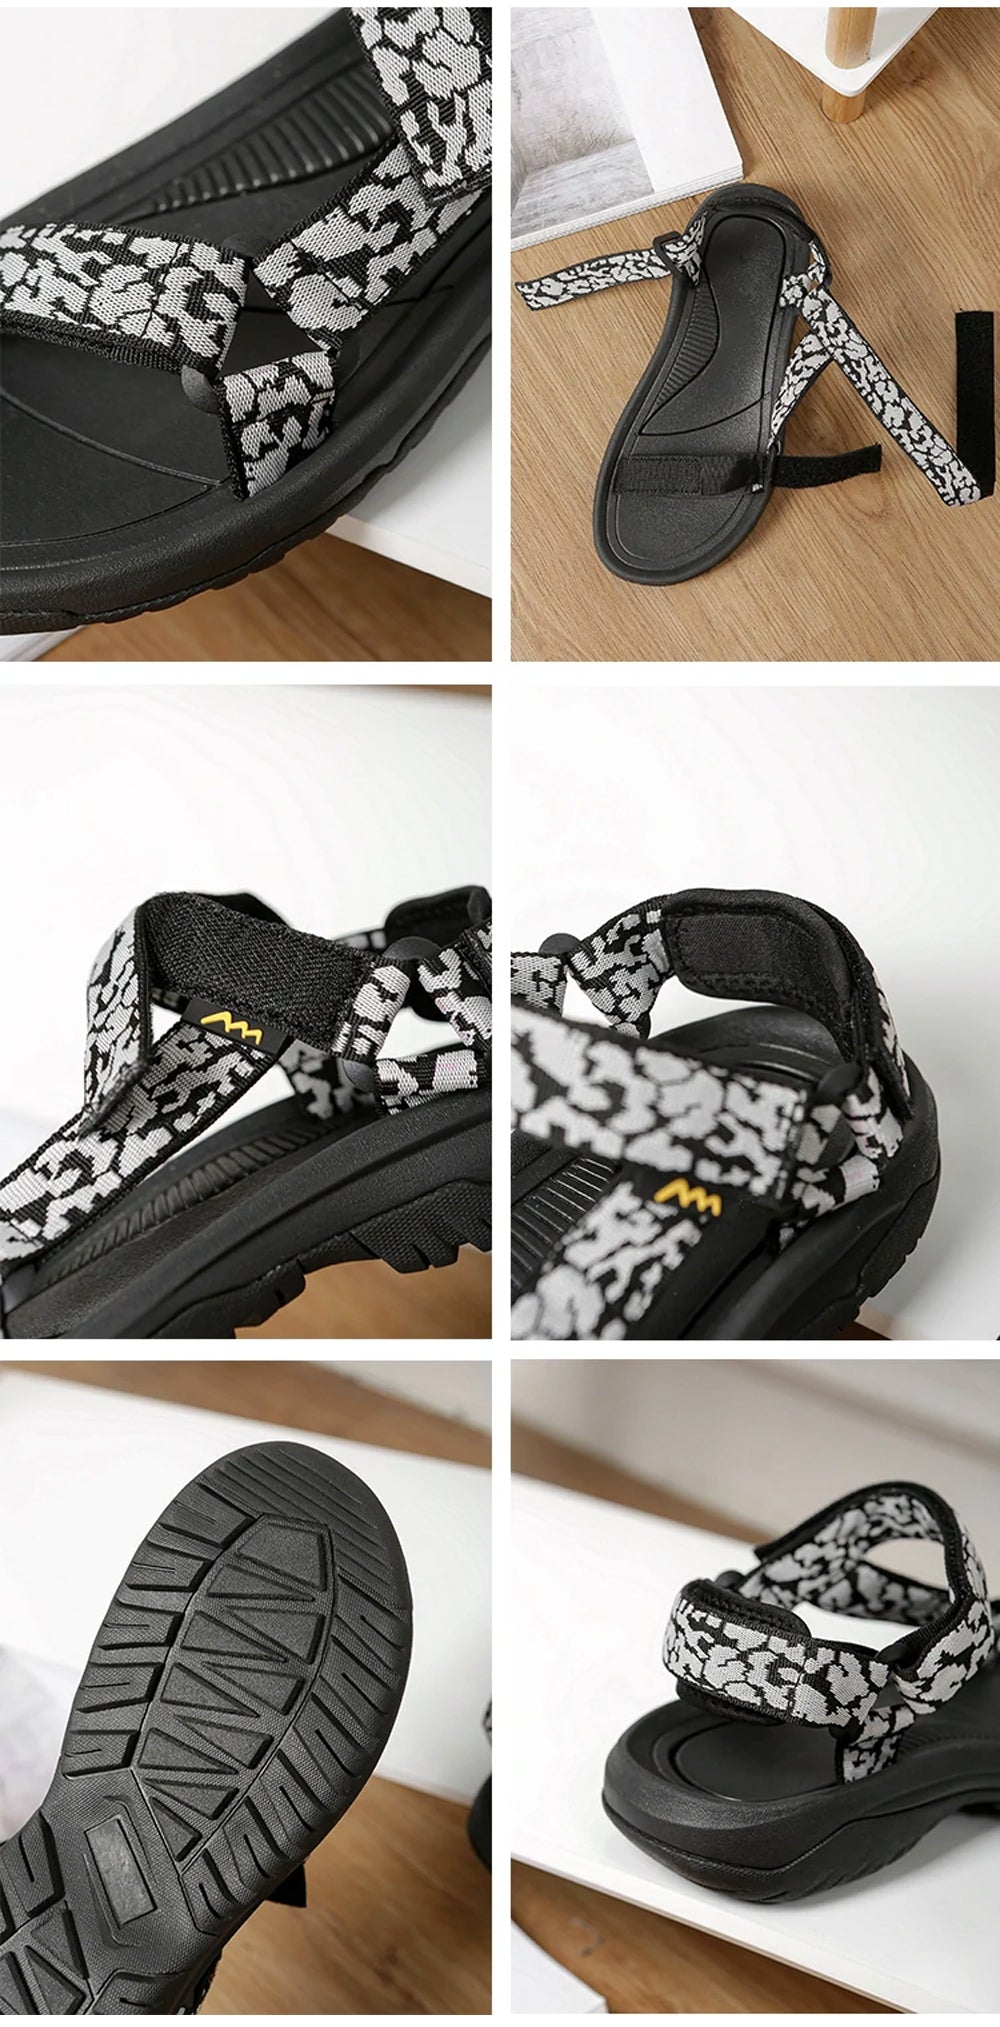 UGG Summer Sandals Features